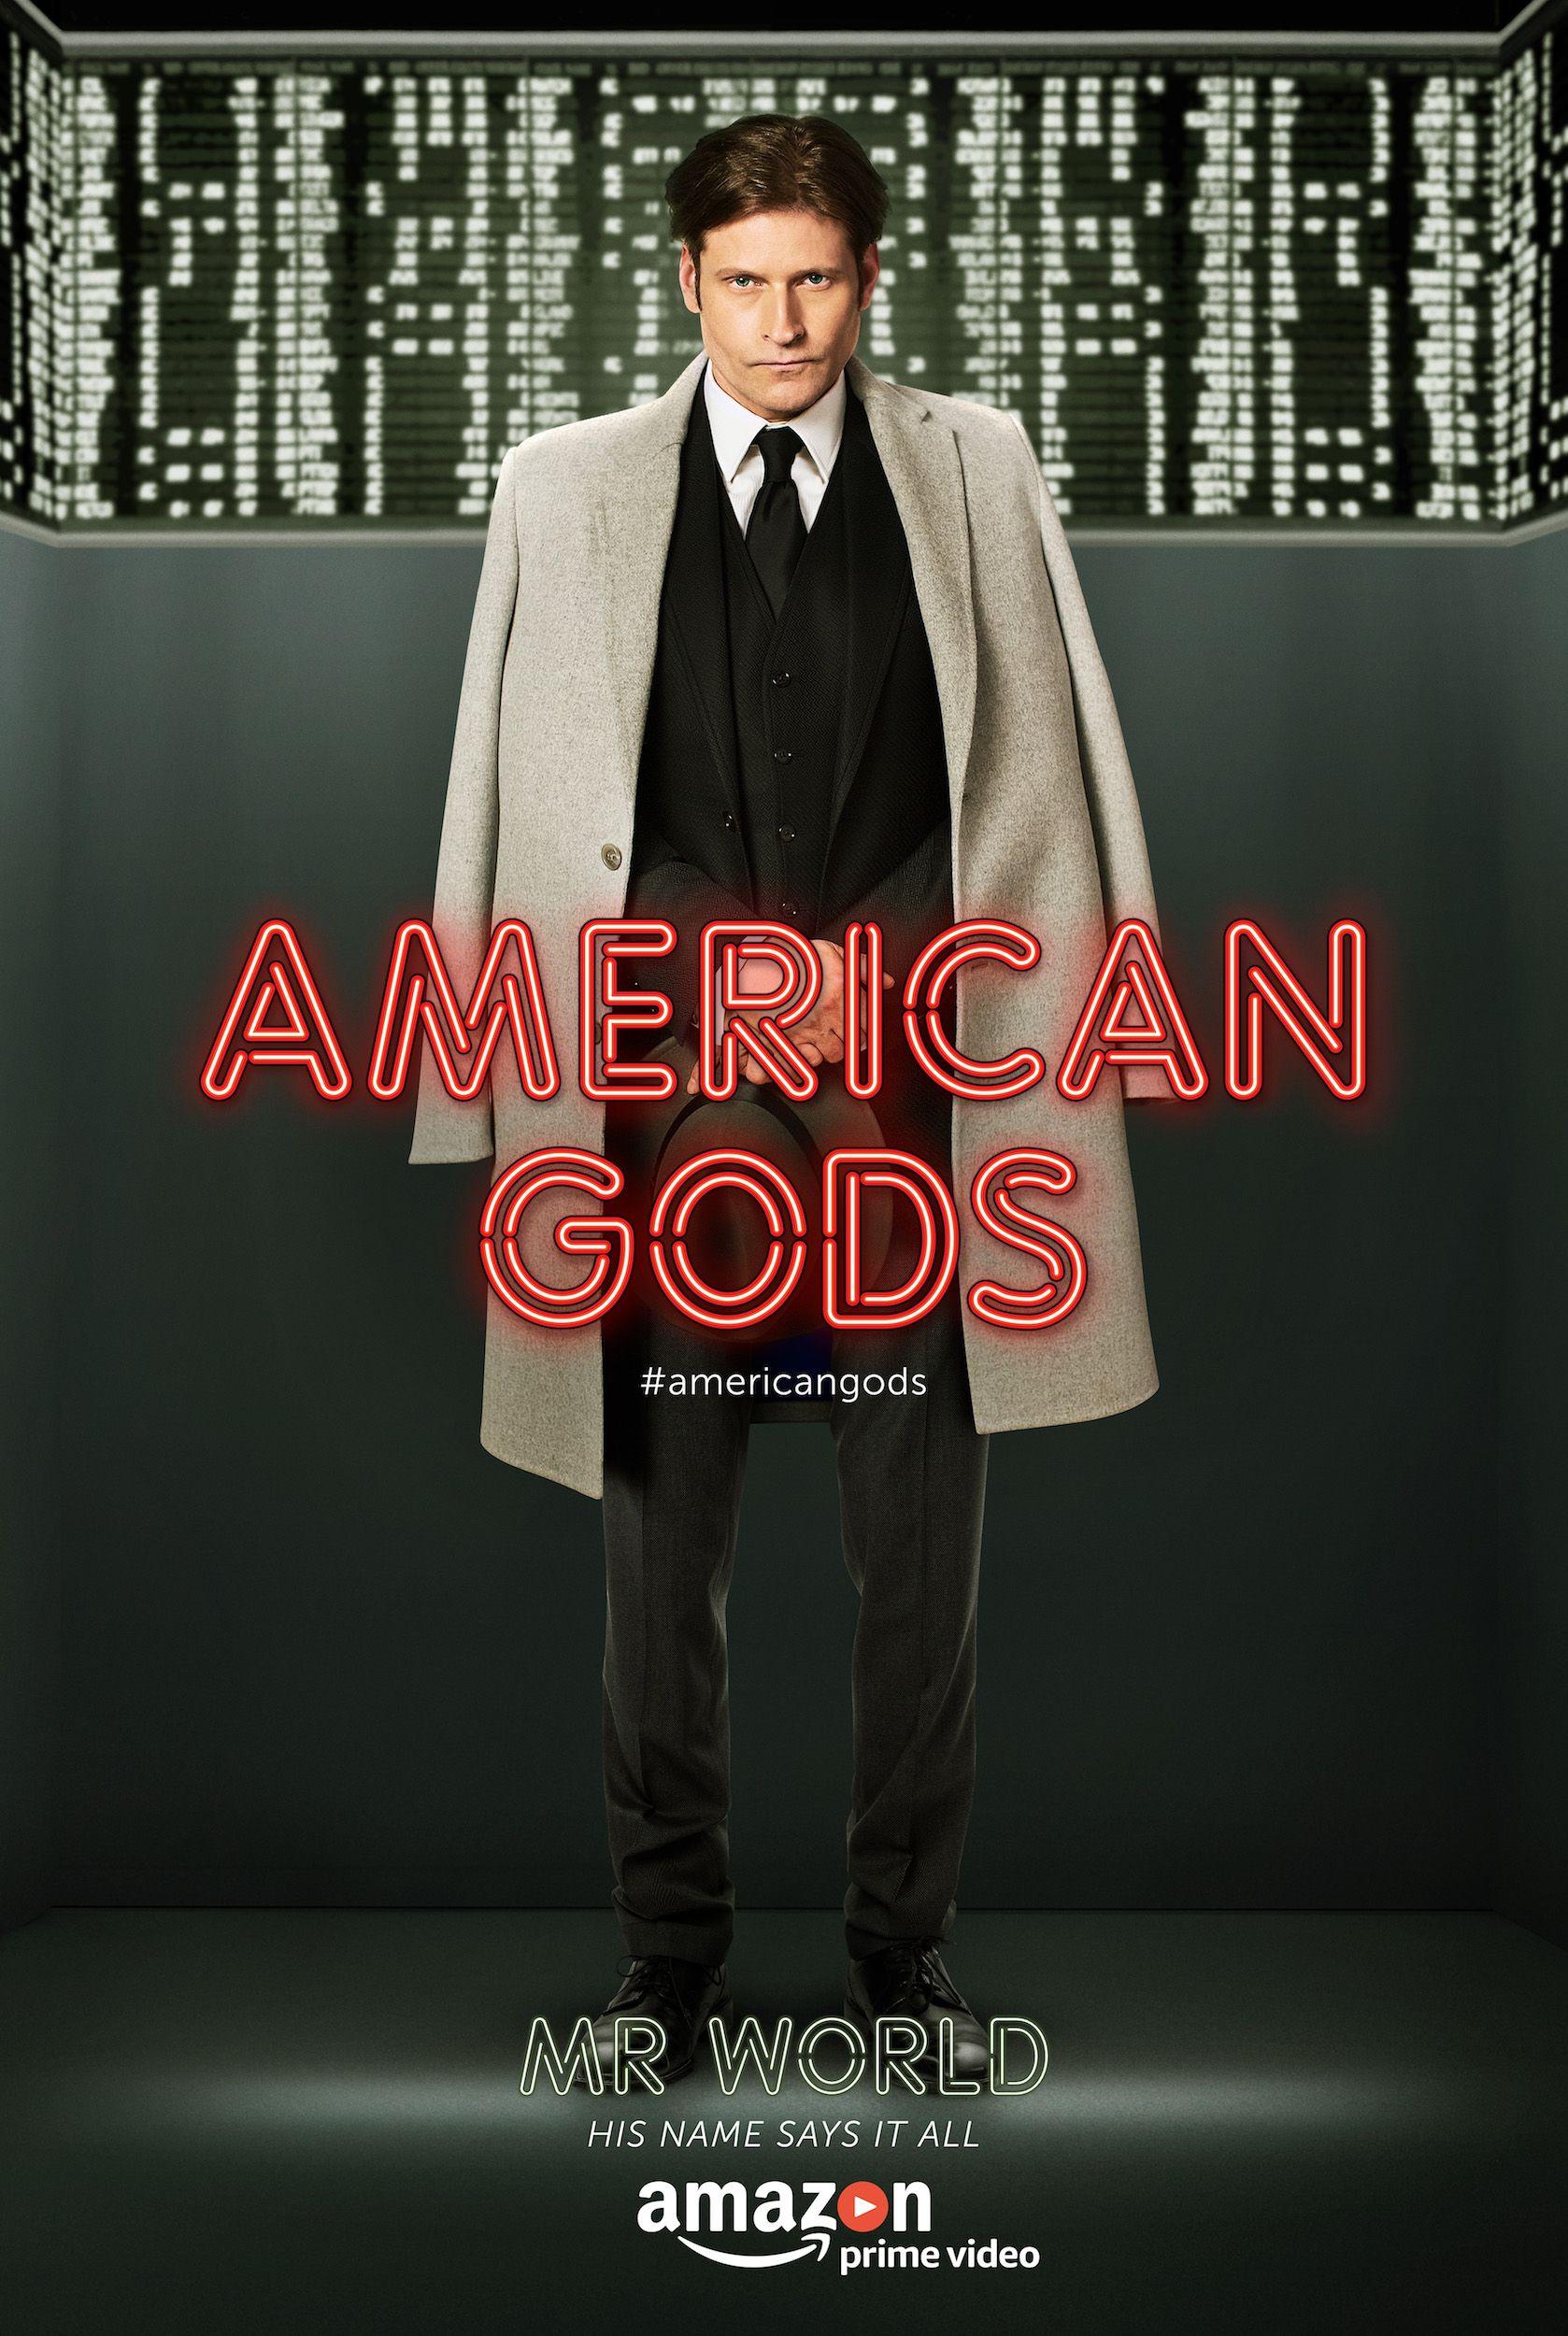 American Gods Photo & Posters. Den of Geek